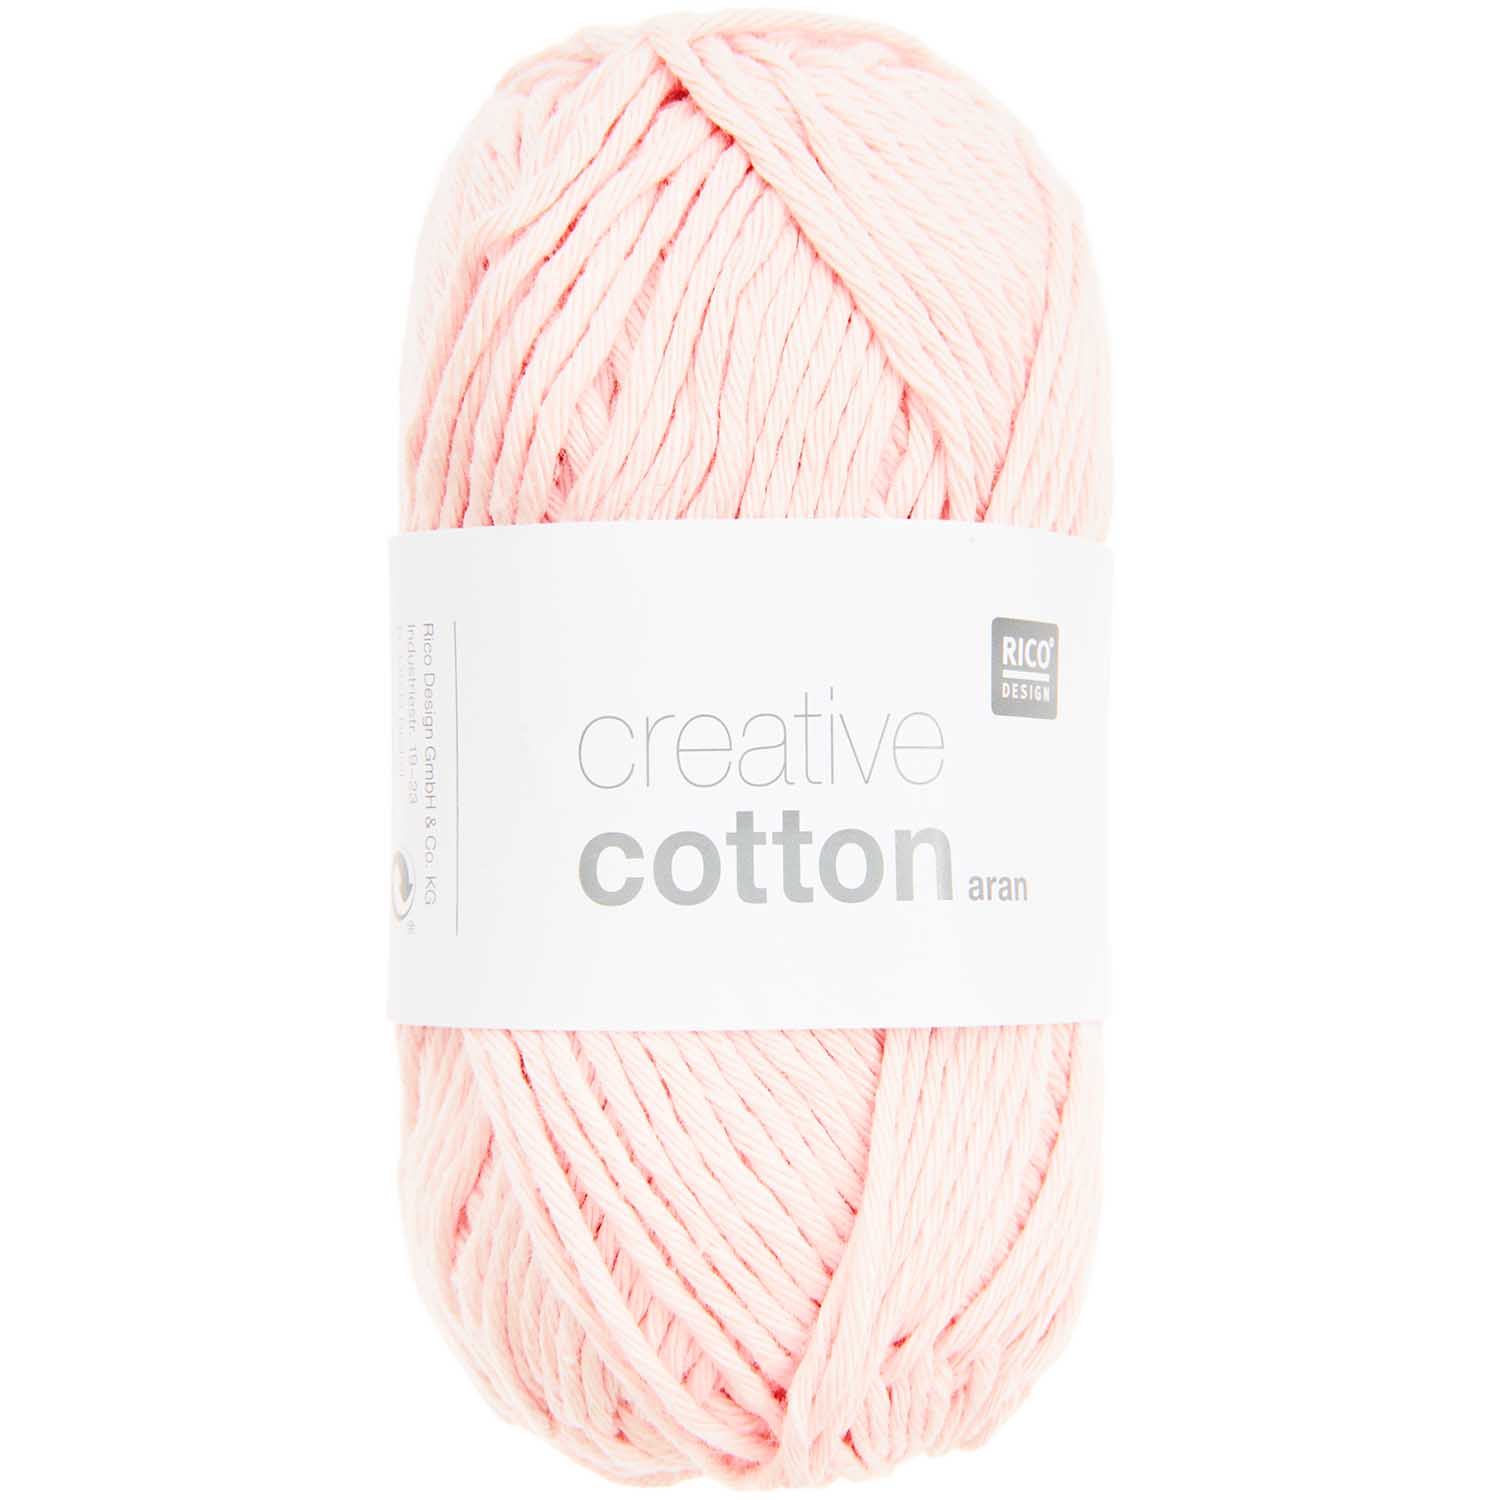 Creative Cotton Aran Rico Design 50g 85m